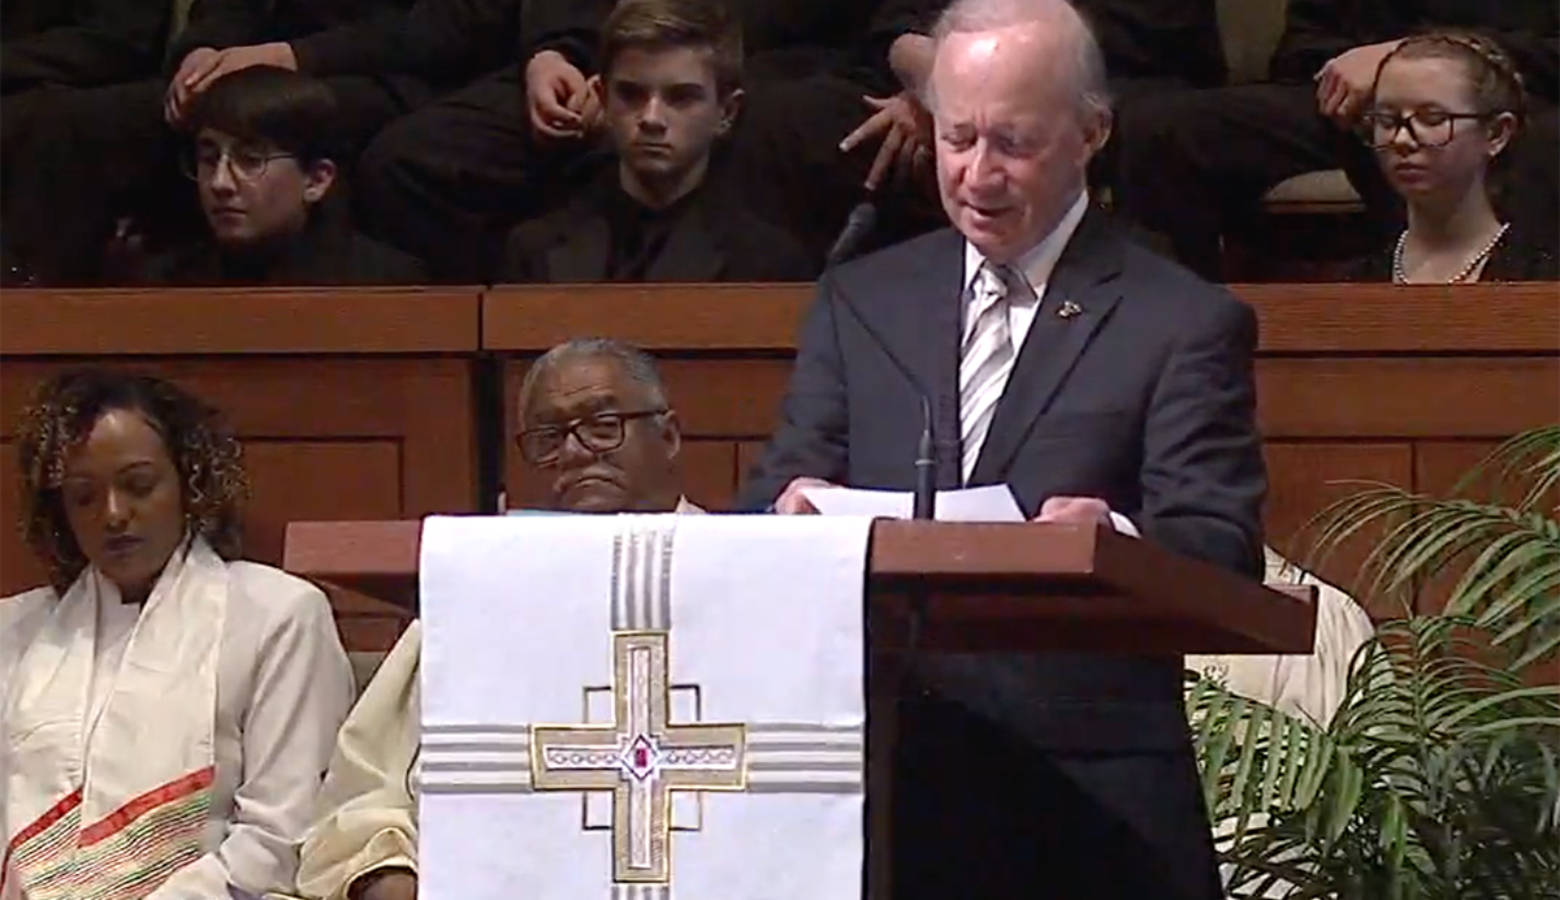 Former Gov. Mitch Daniels – a longtime Lugar staffer – speaks at former U.S. Sen. Richard Lugar's funeral in Indianapolis. (Courtesy of Lugar Center livestream)